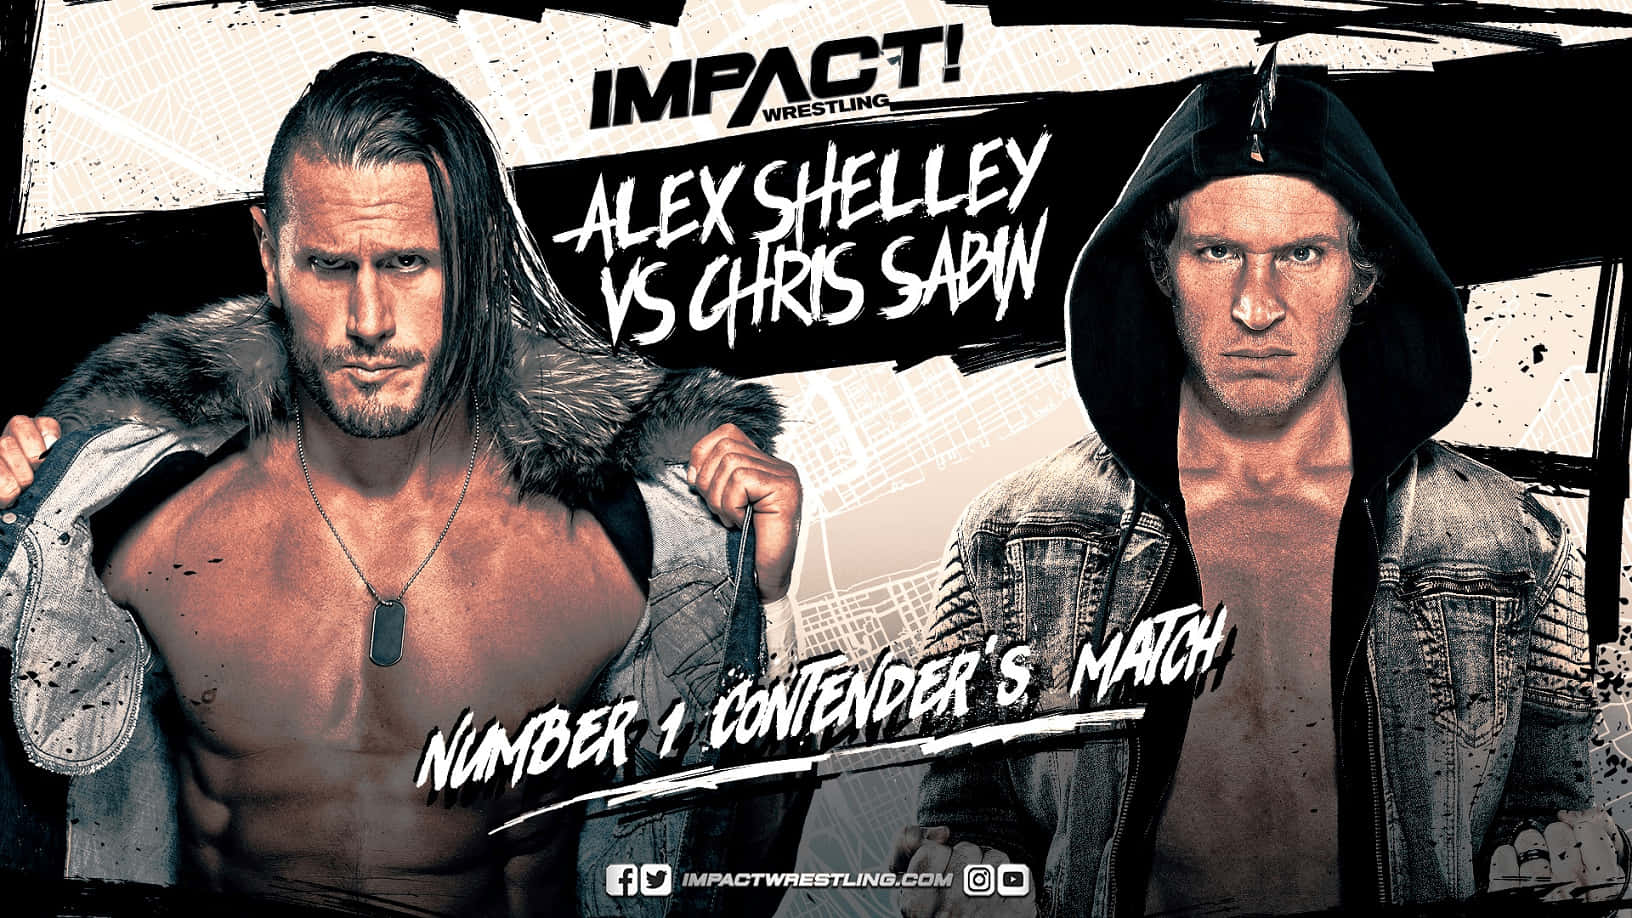 Alex Shelley Vs Chris Sabin On Impact Wrestling Wallpaper